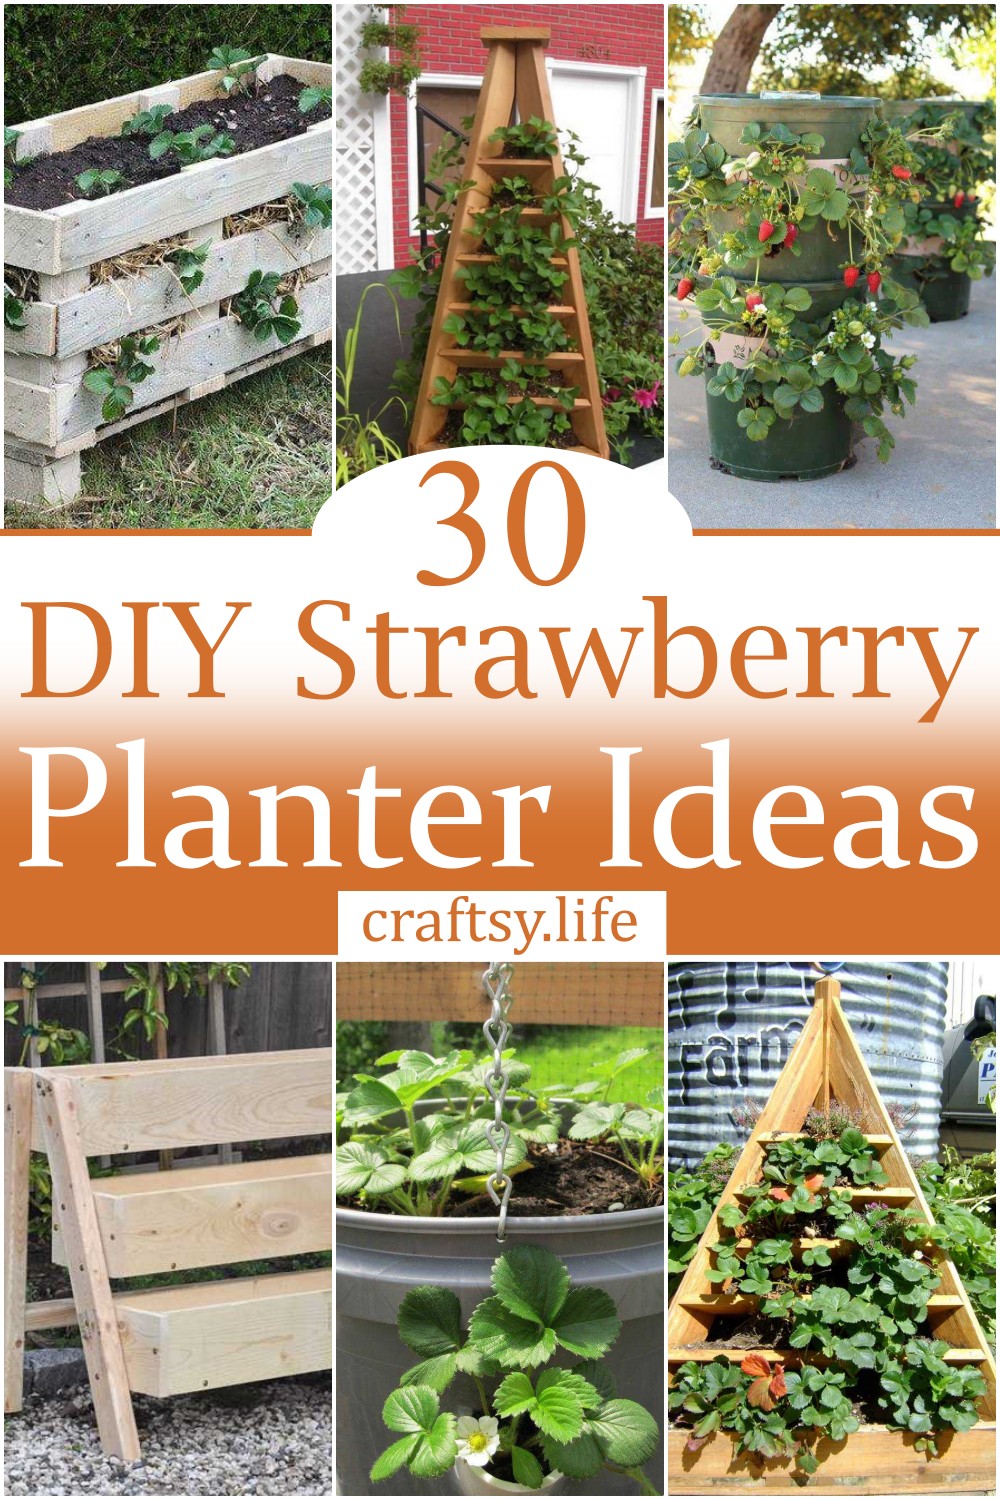 DIY Strawberry Planter Ideas